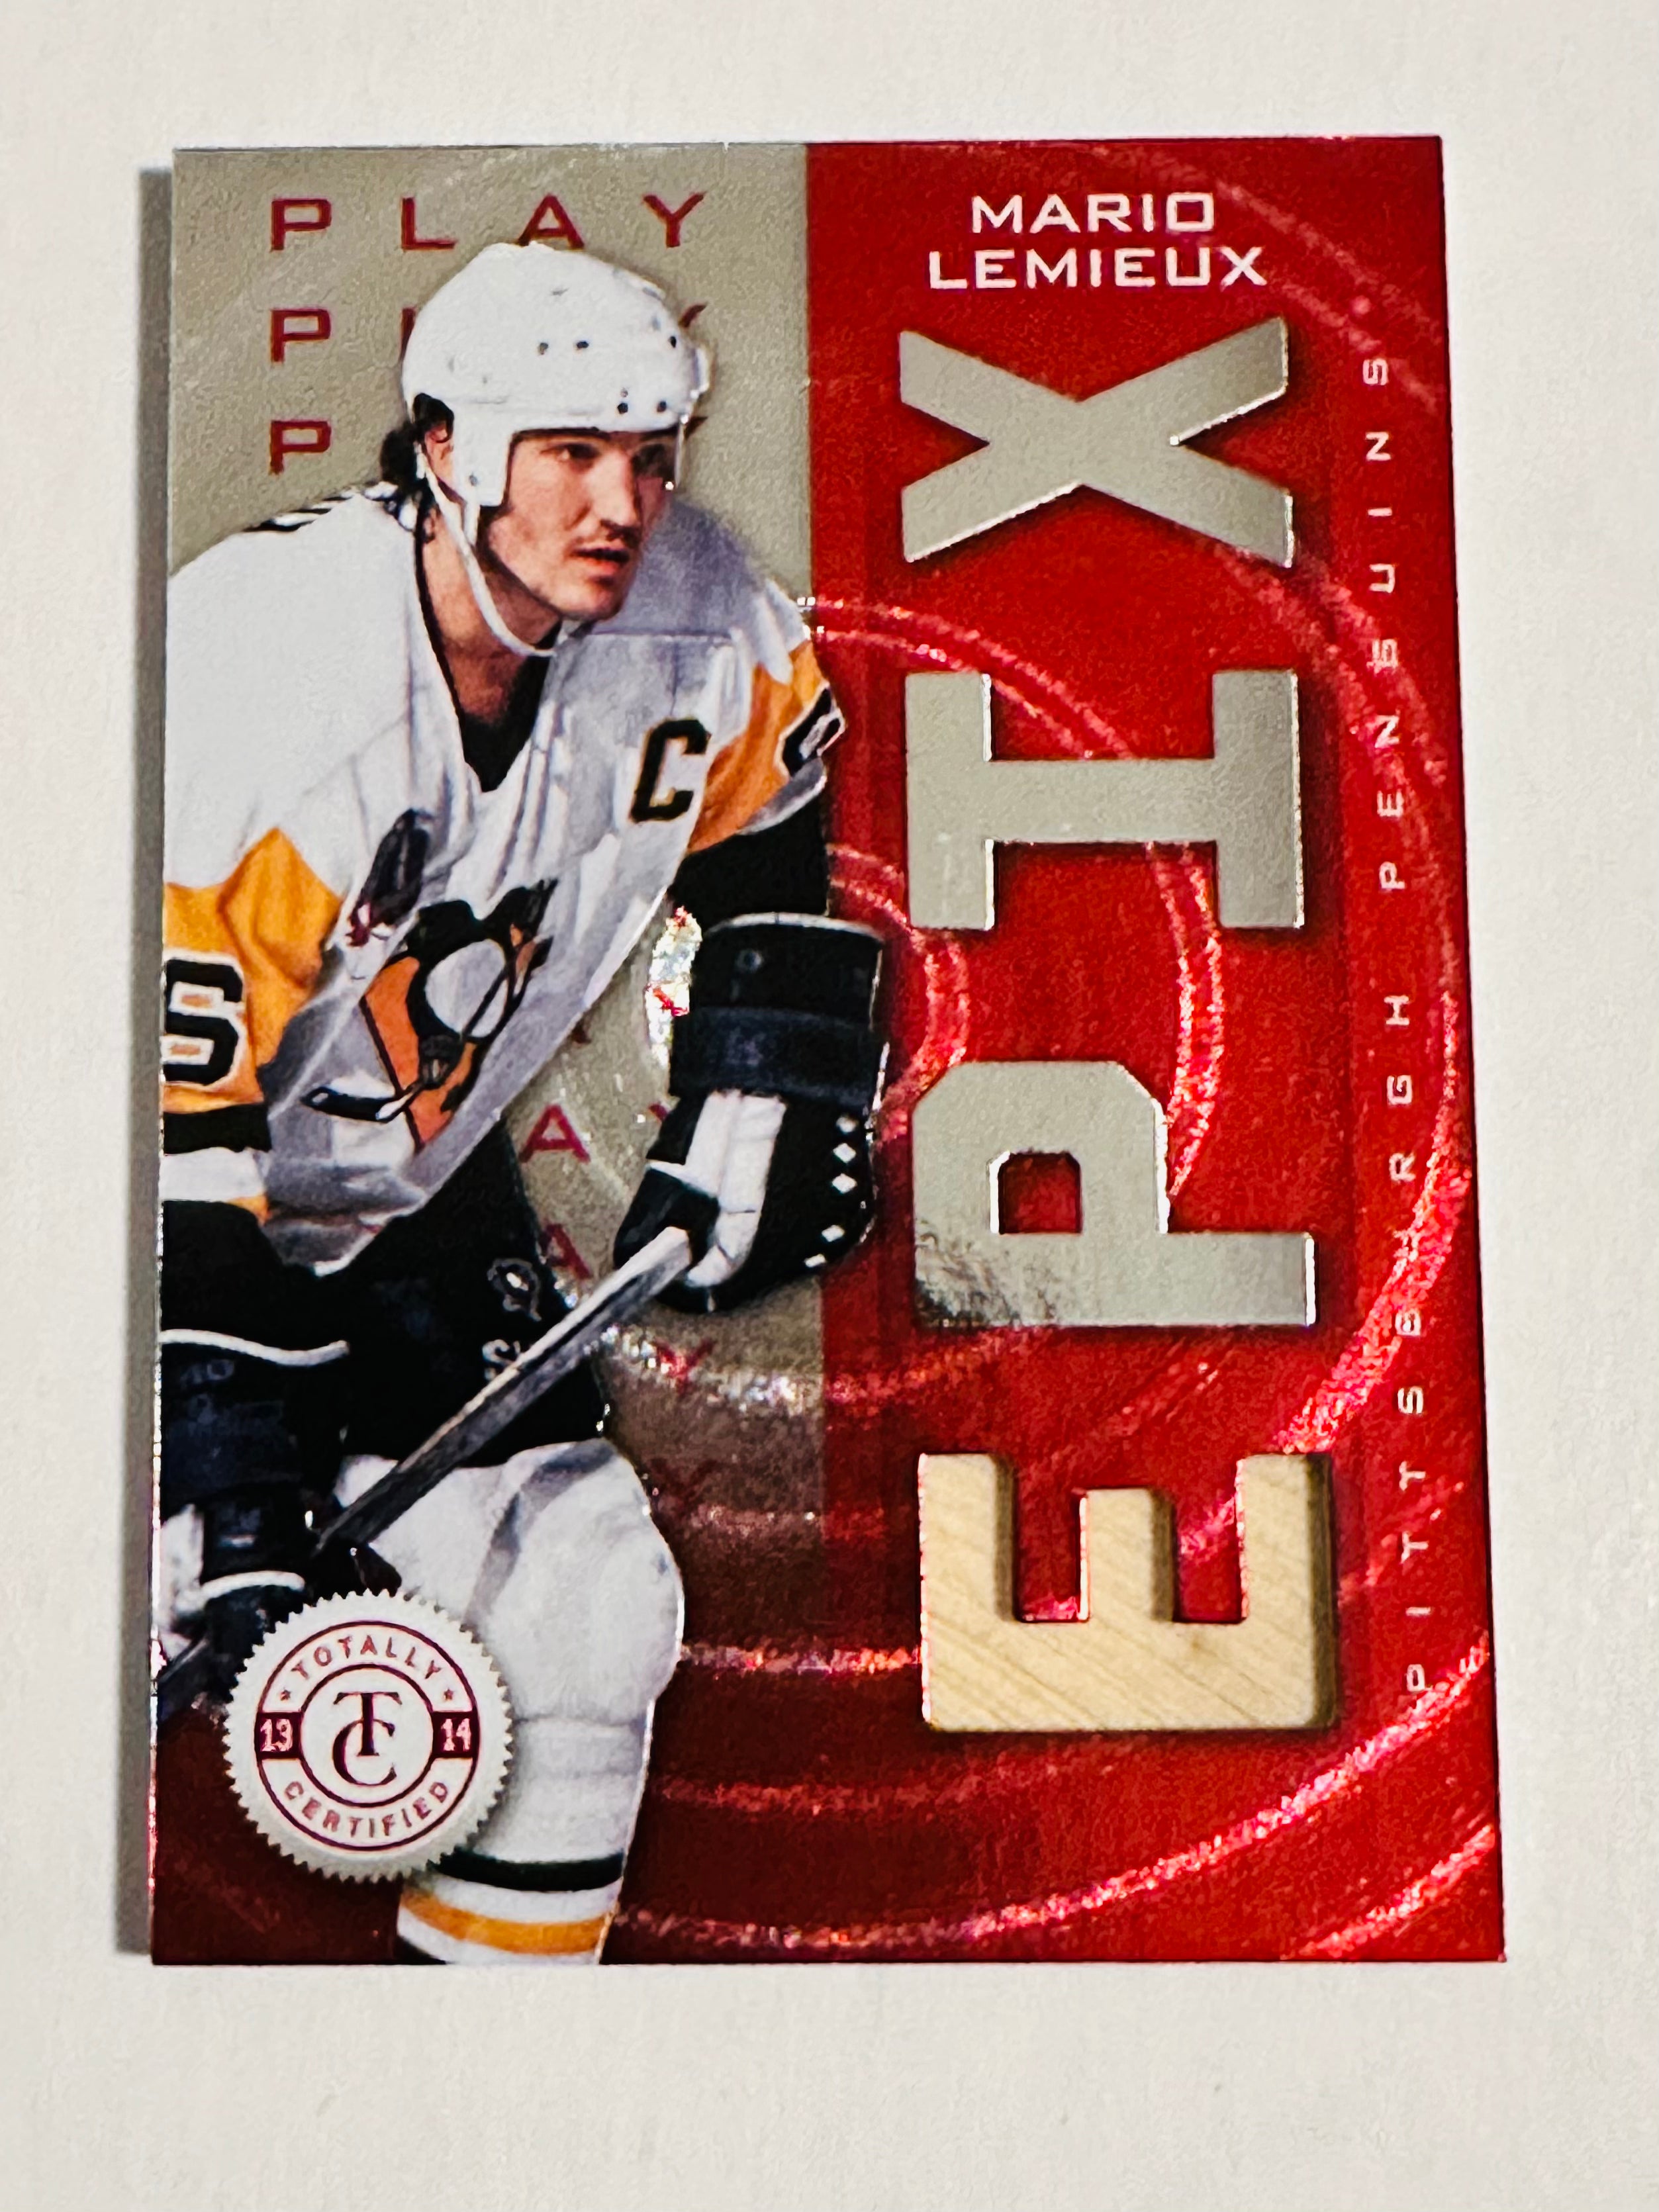 Mario Lemieux Epix rare memorabilia insert hockey card 2013/14